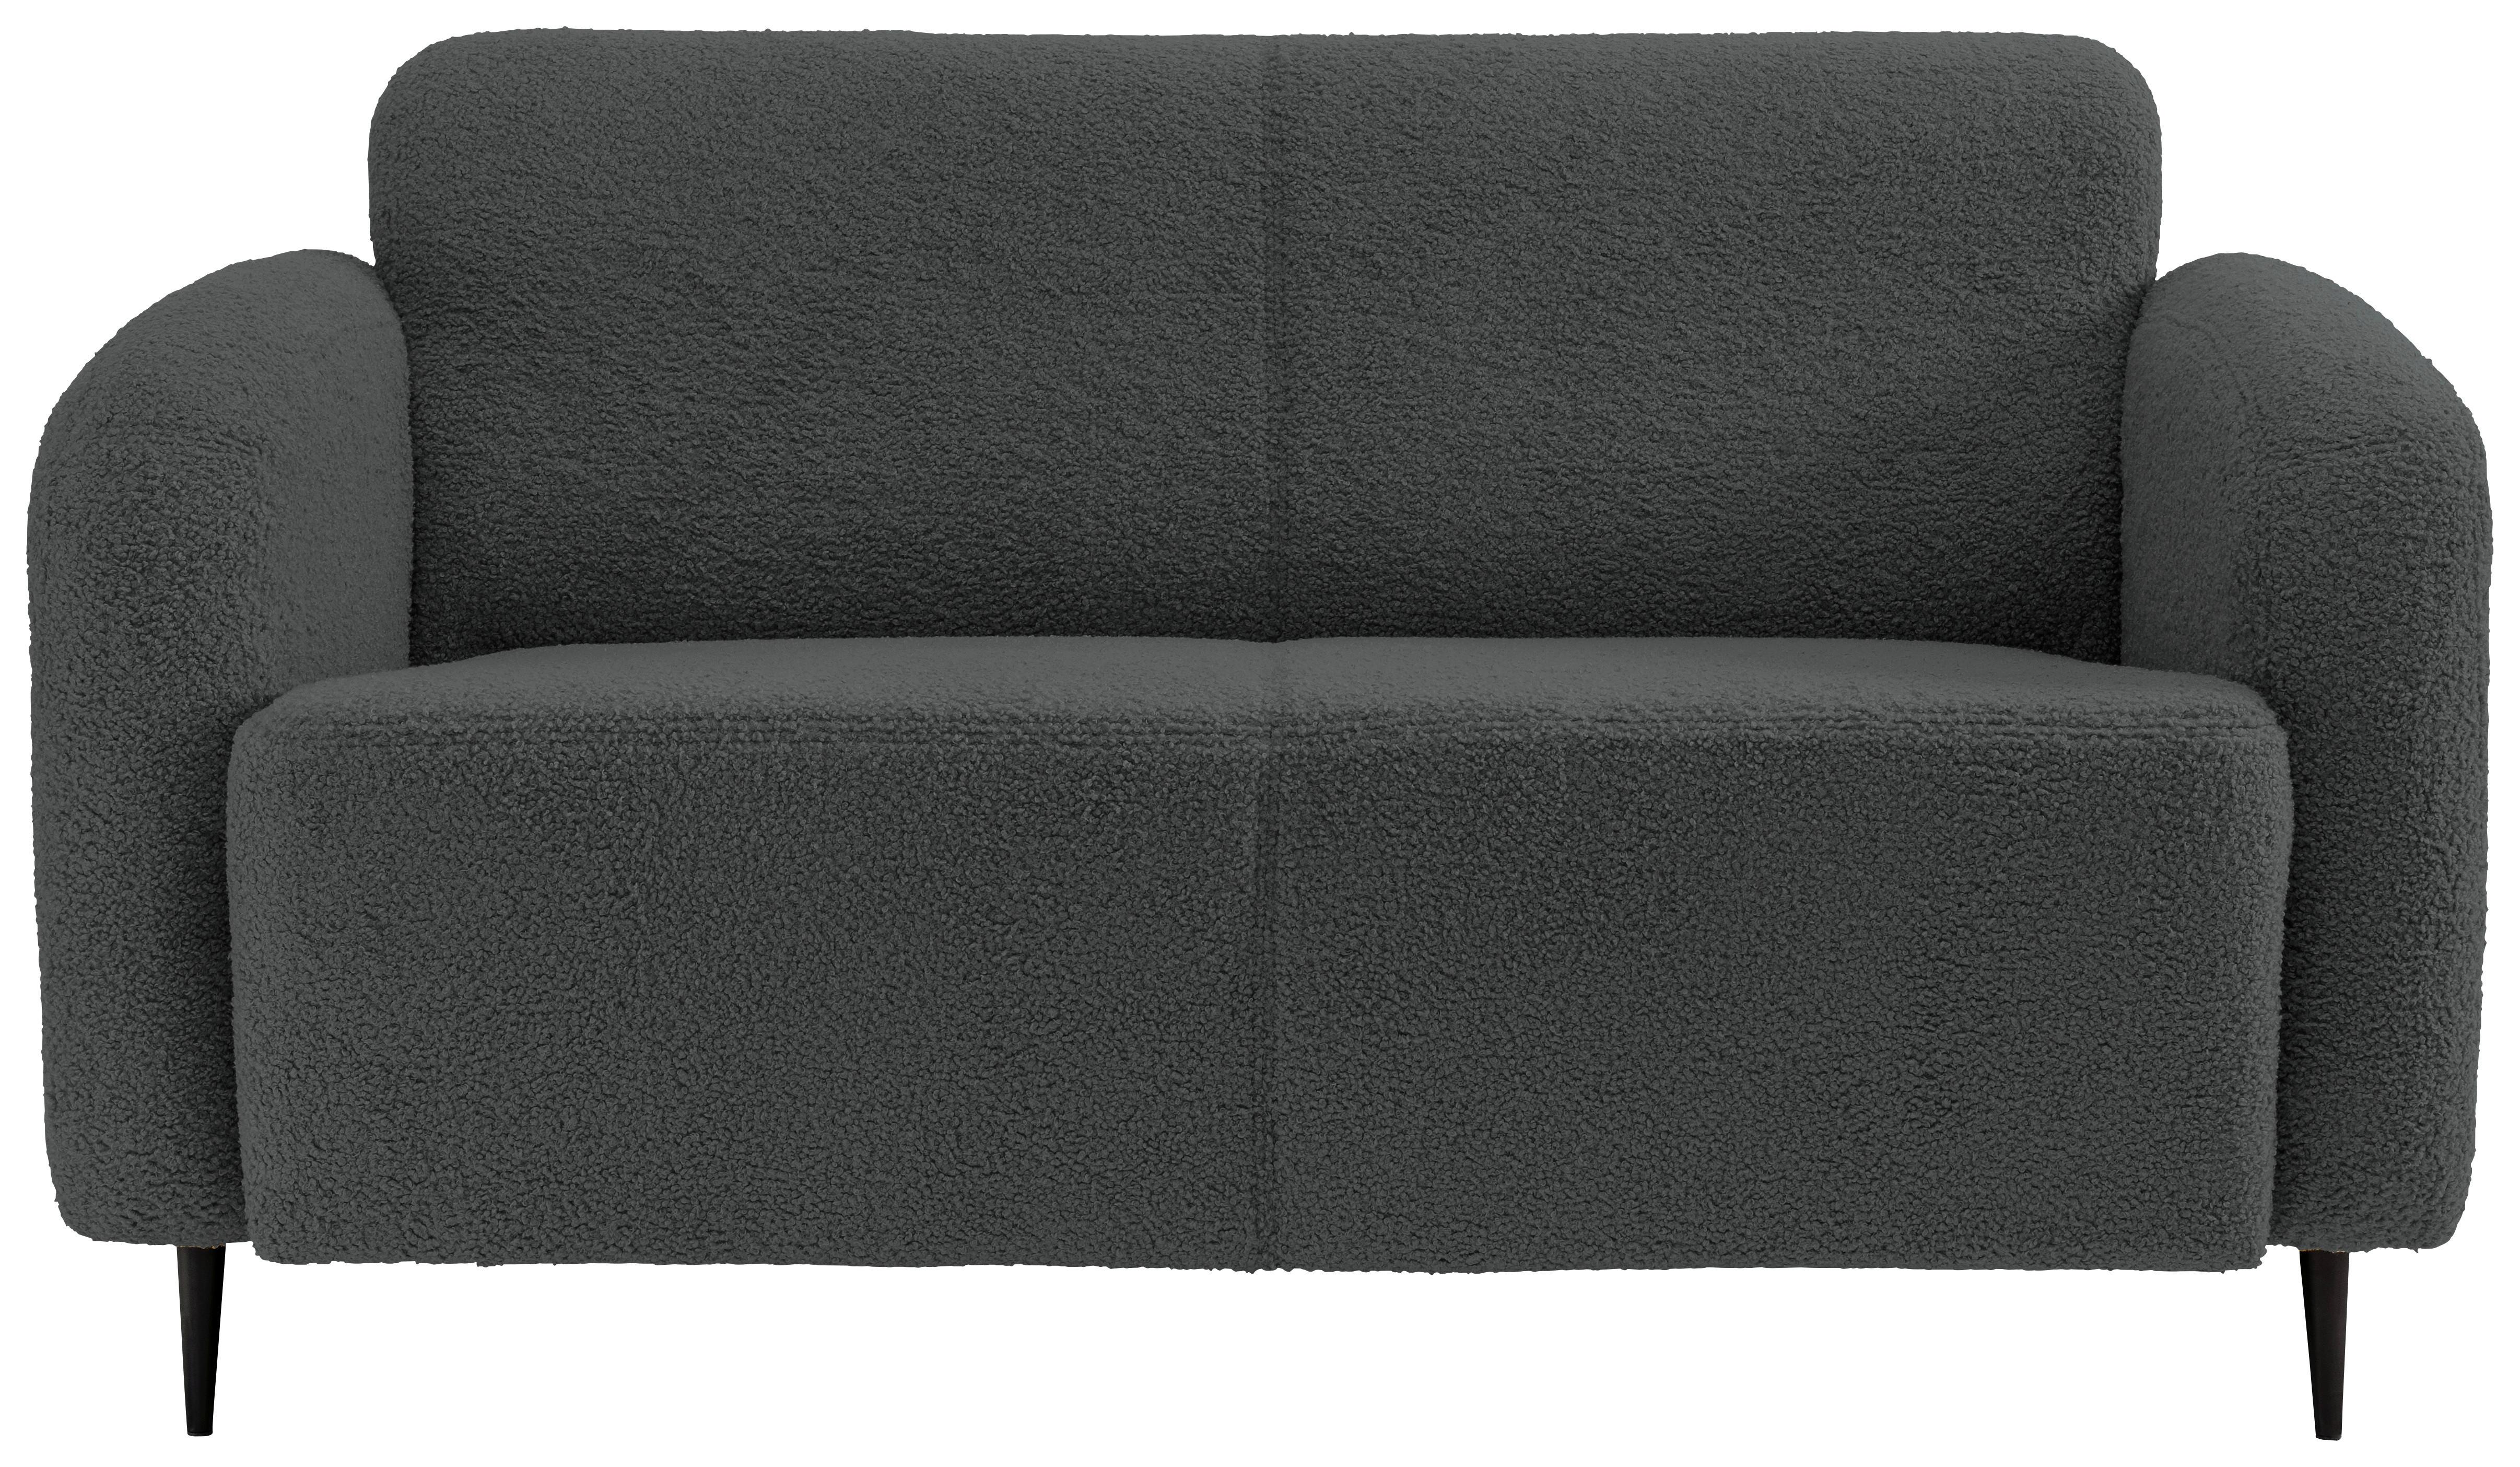 2-Sitzer-Sofa Marone Anthrazit Teddystoff - Anthrazit/Schwarz, MODERN, Textil/Metall (140/76/90cm) - Livetastic